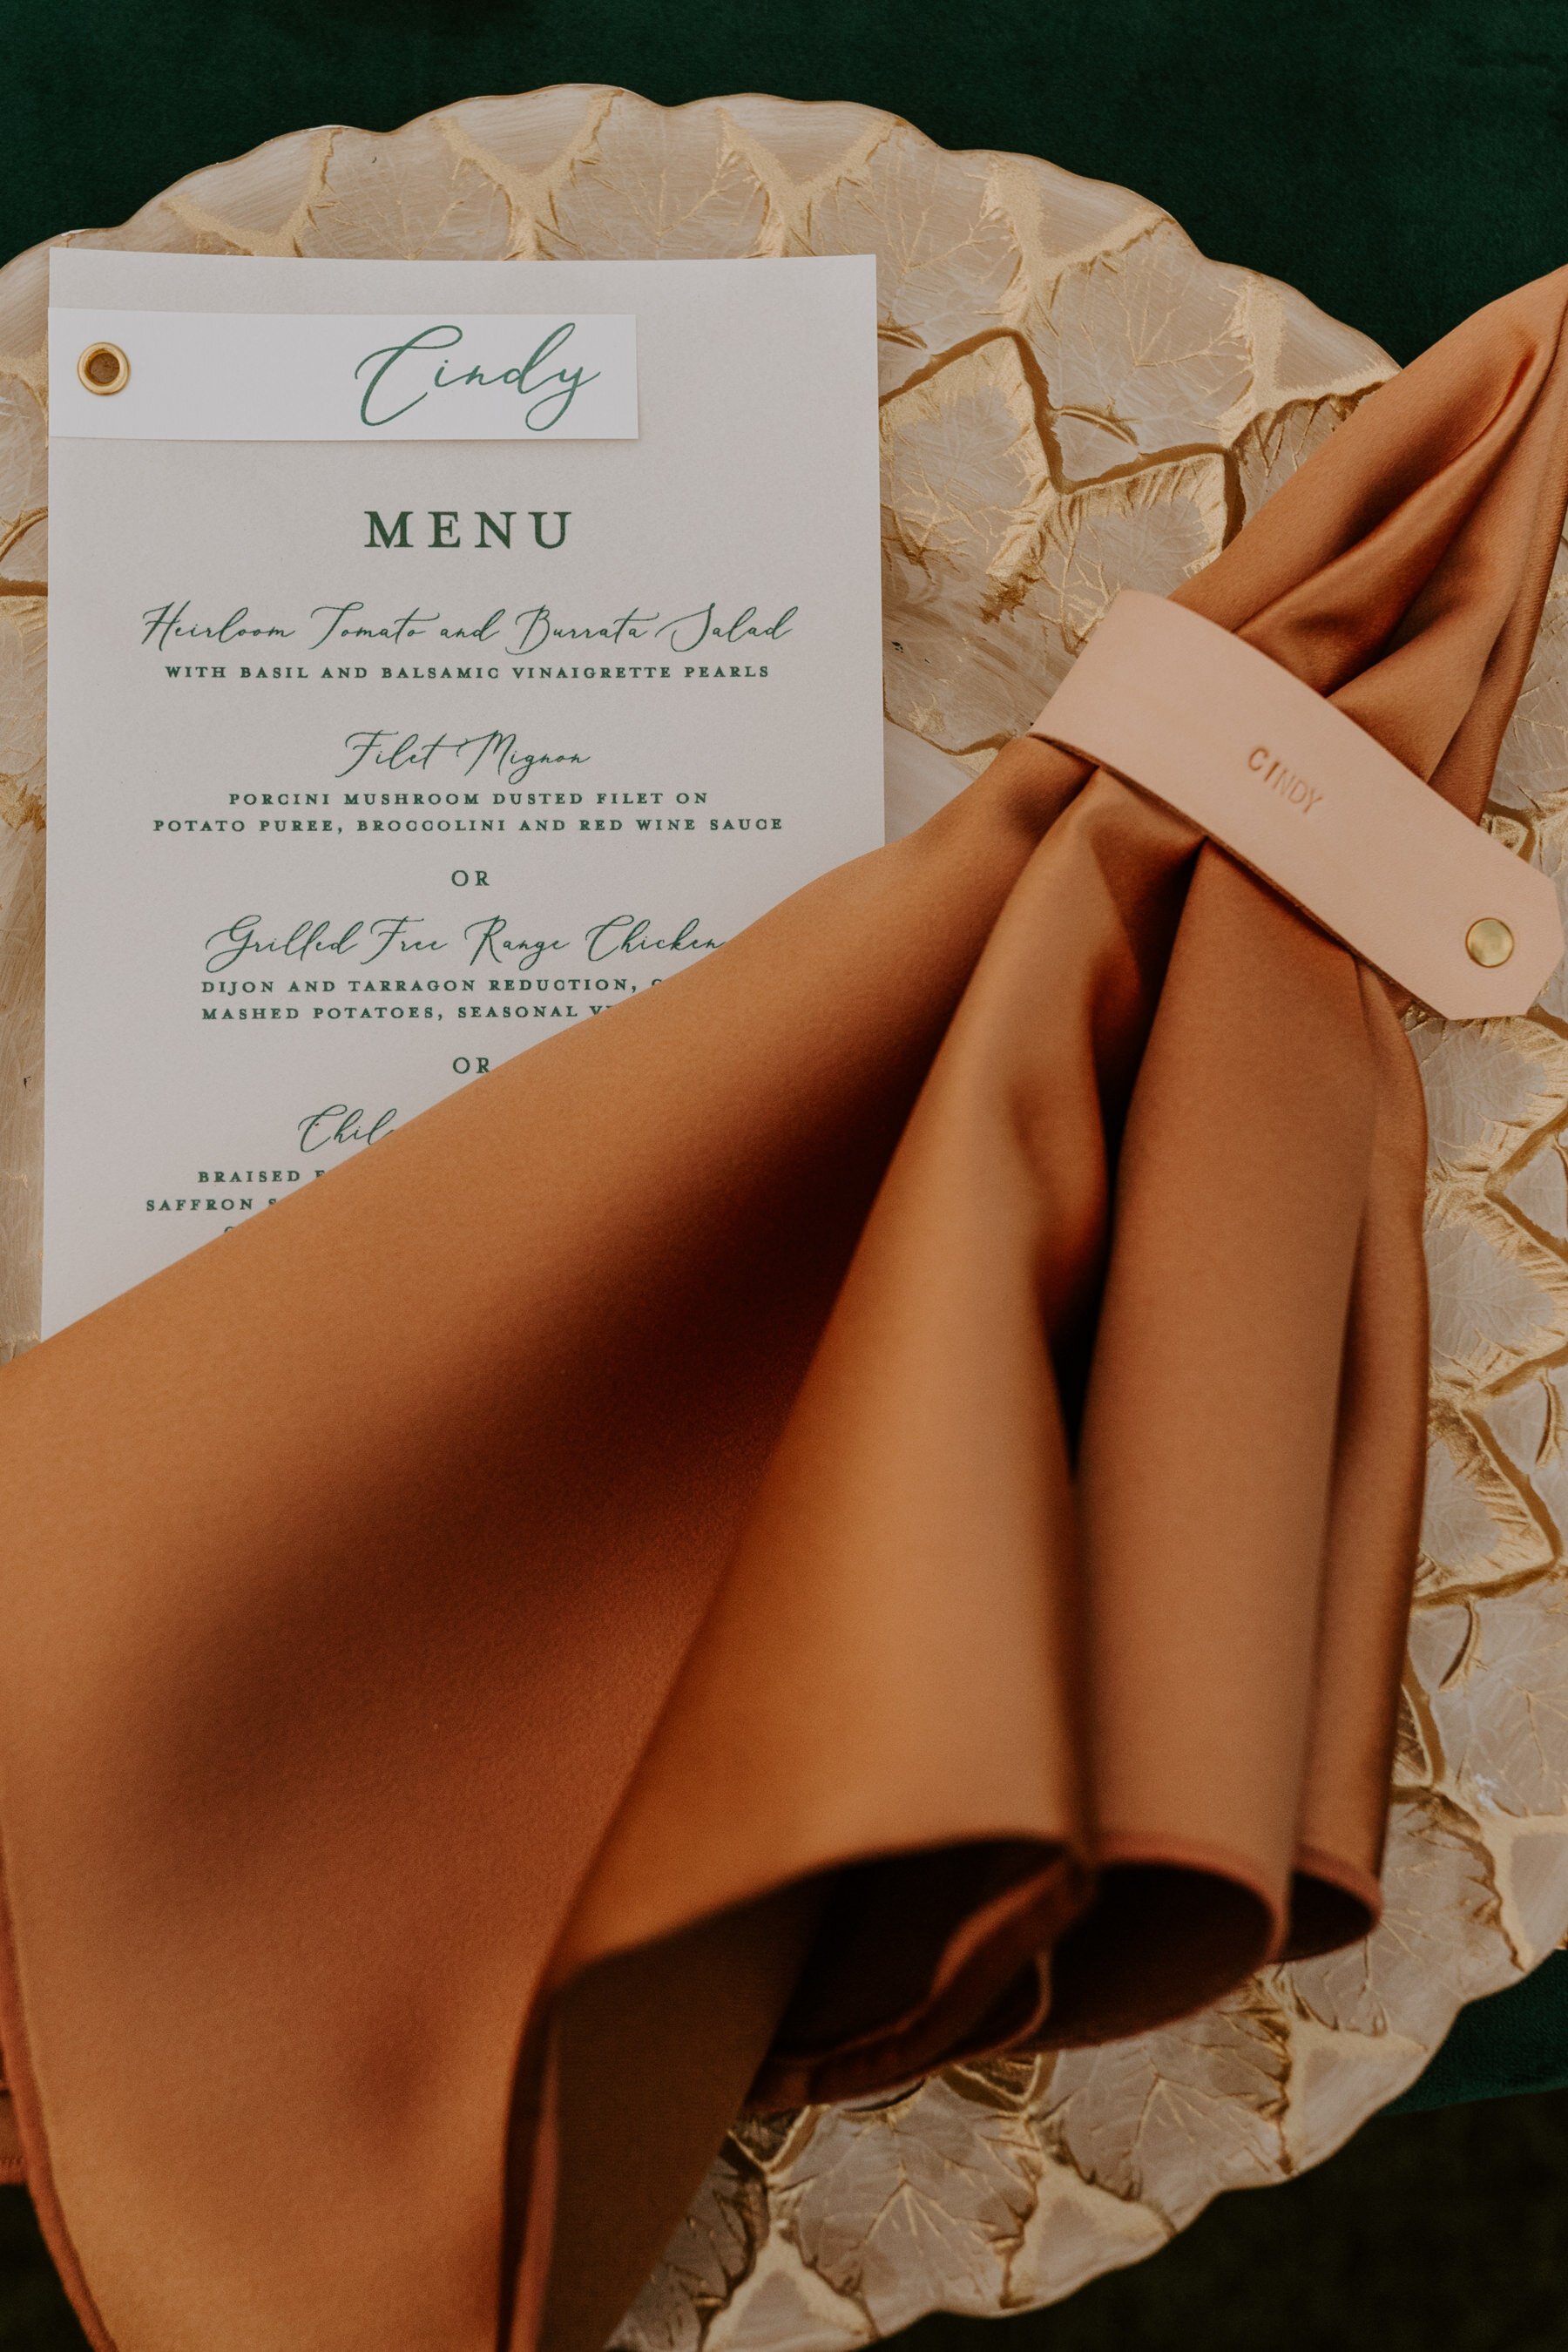 Gold charger, orange napkin, leather napkin ring, modern jewel toned inspired wedding place setting.